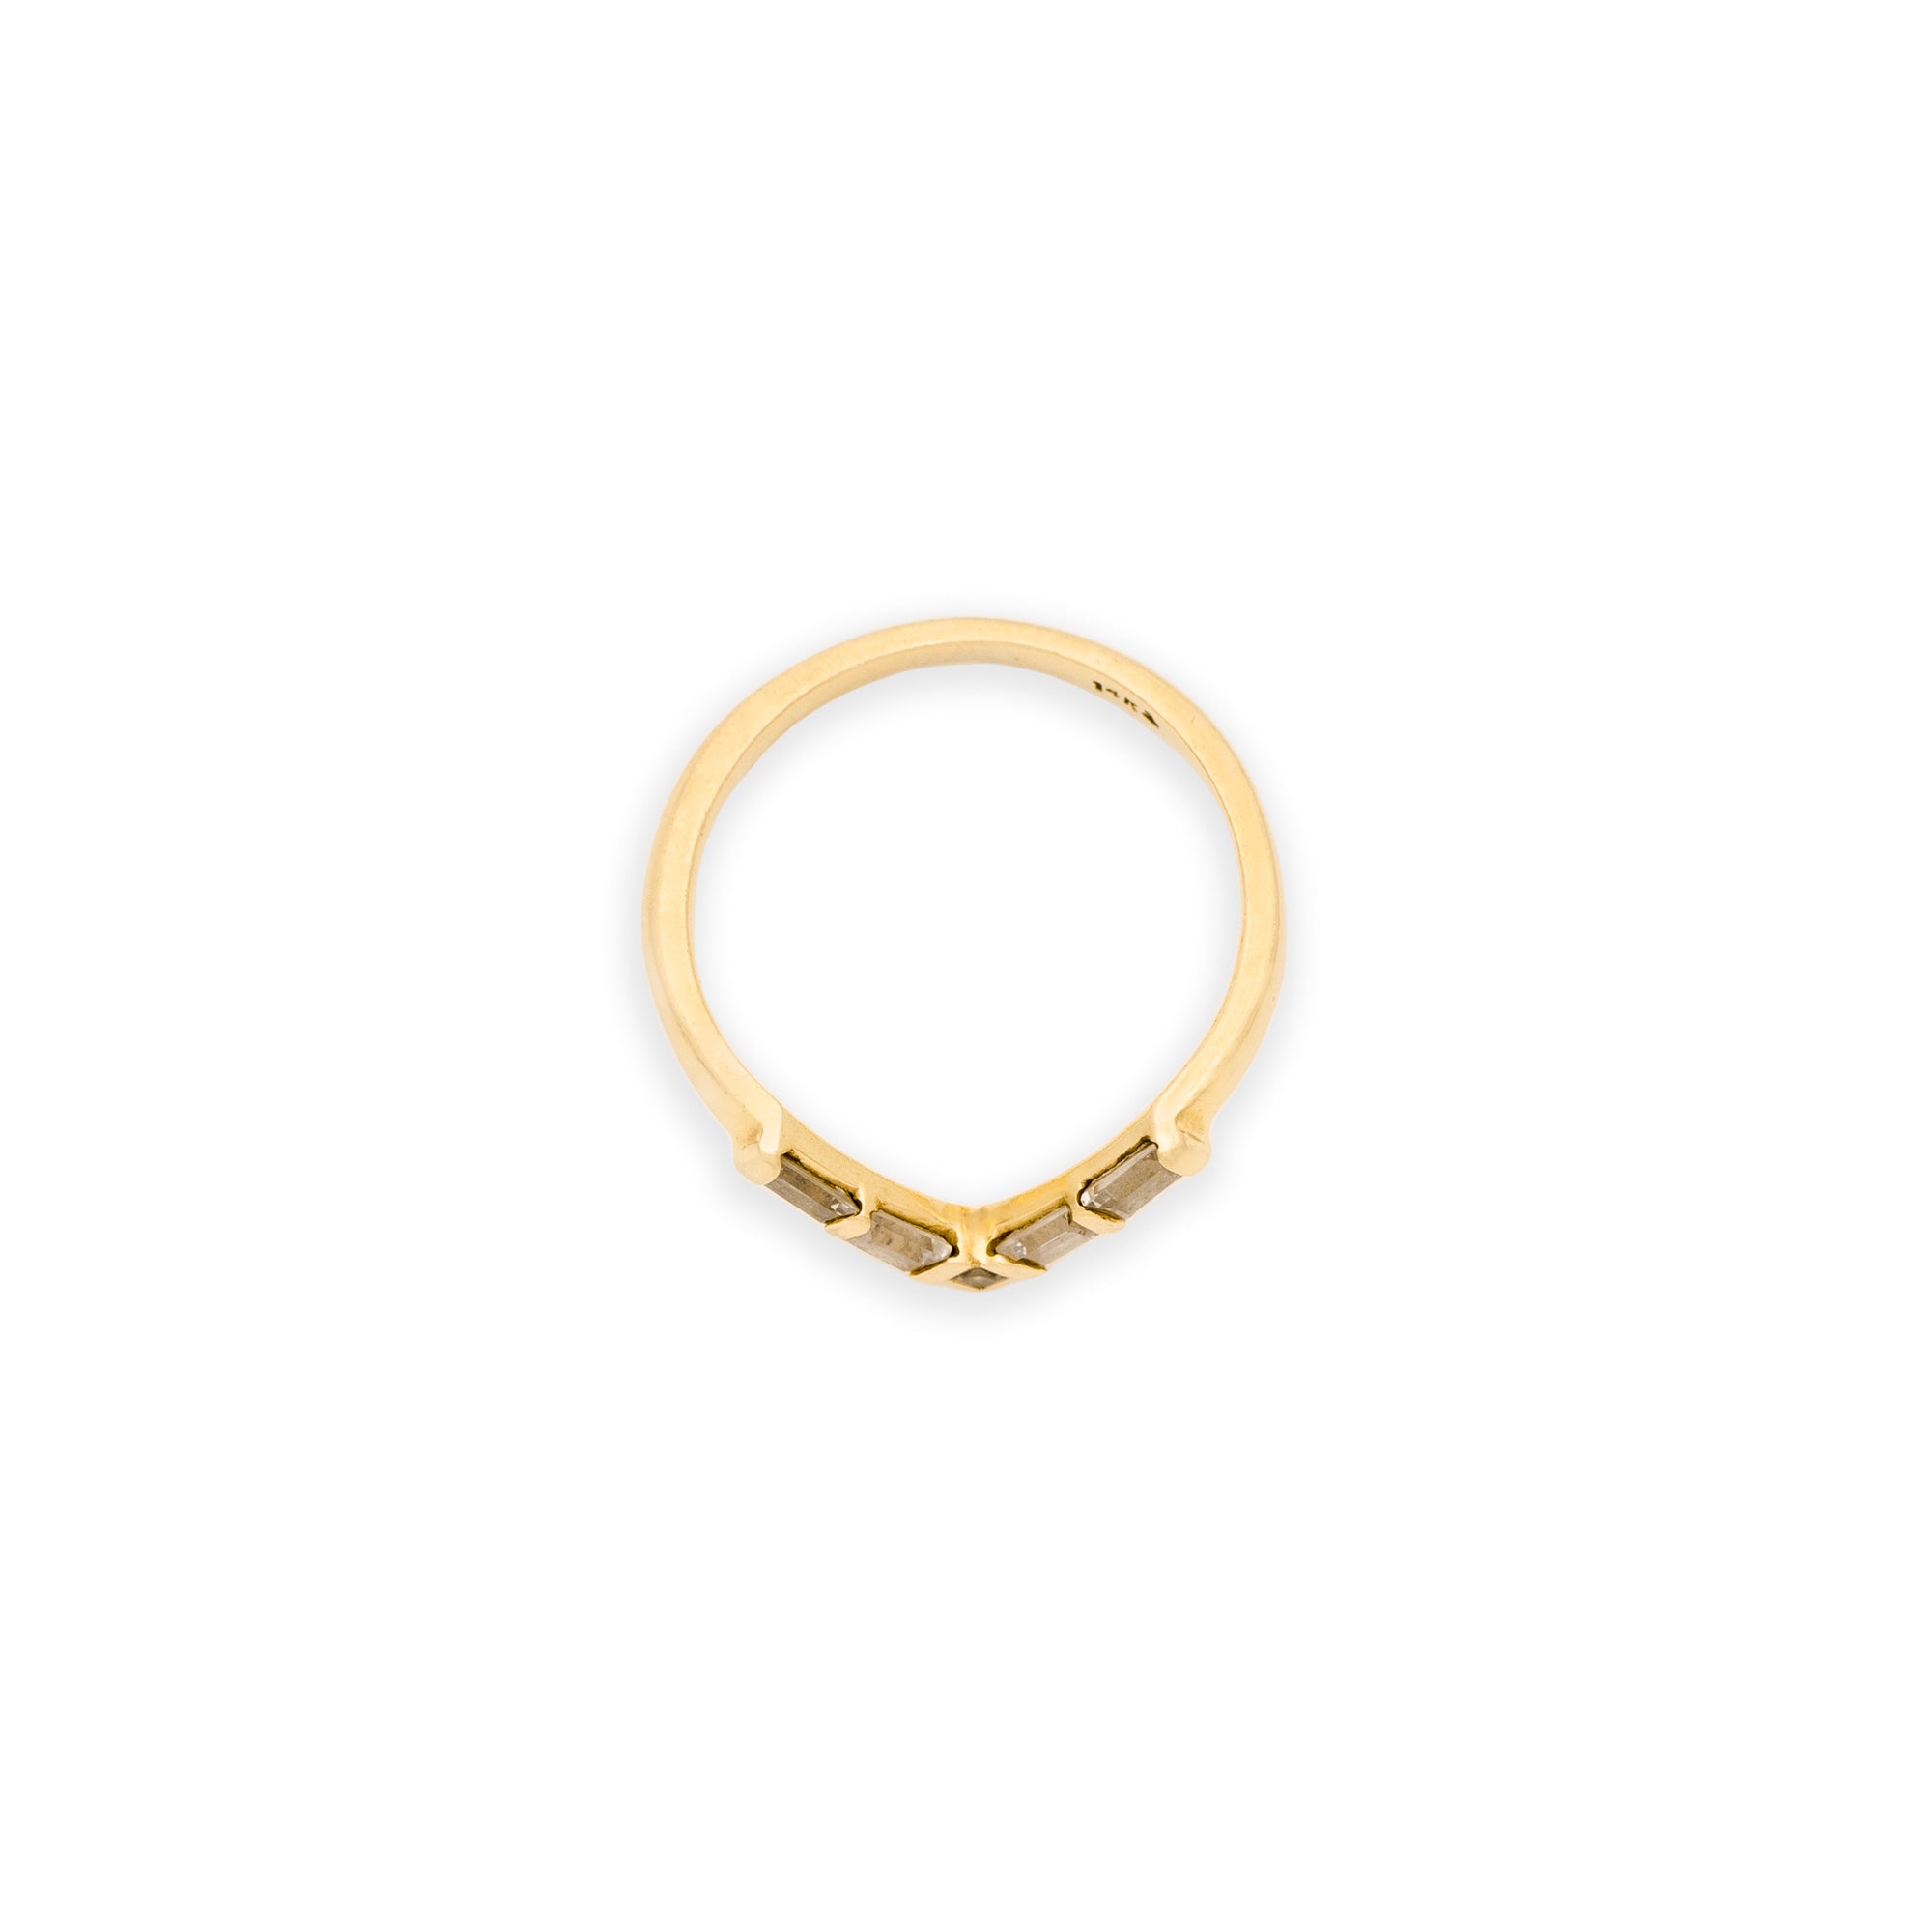 Erin Deco Diamond Ring from Erin Fader Jewelry